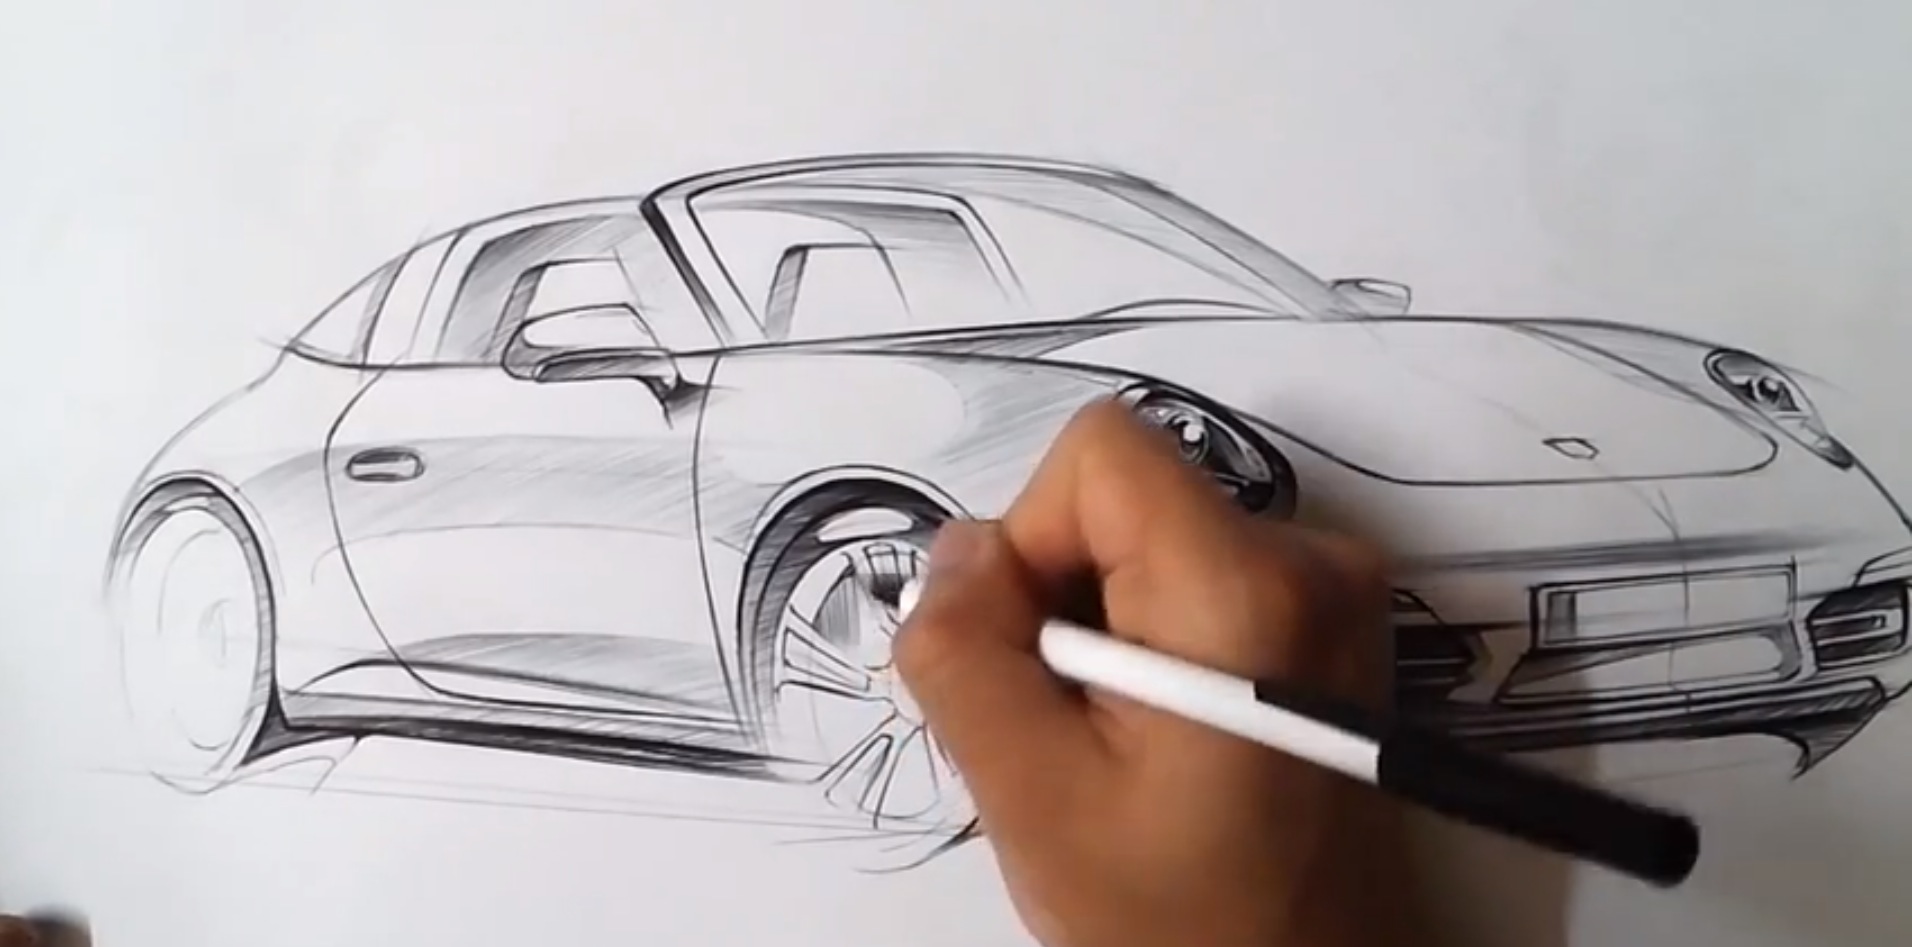 Porsche Drawing Image